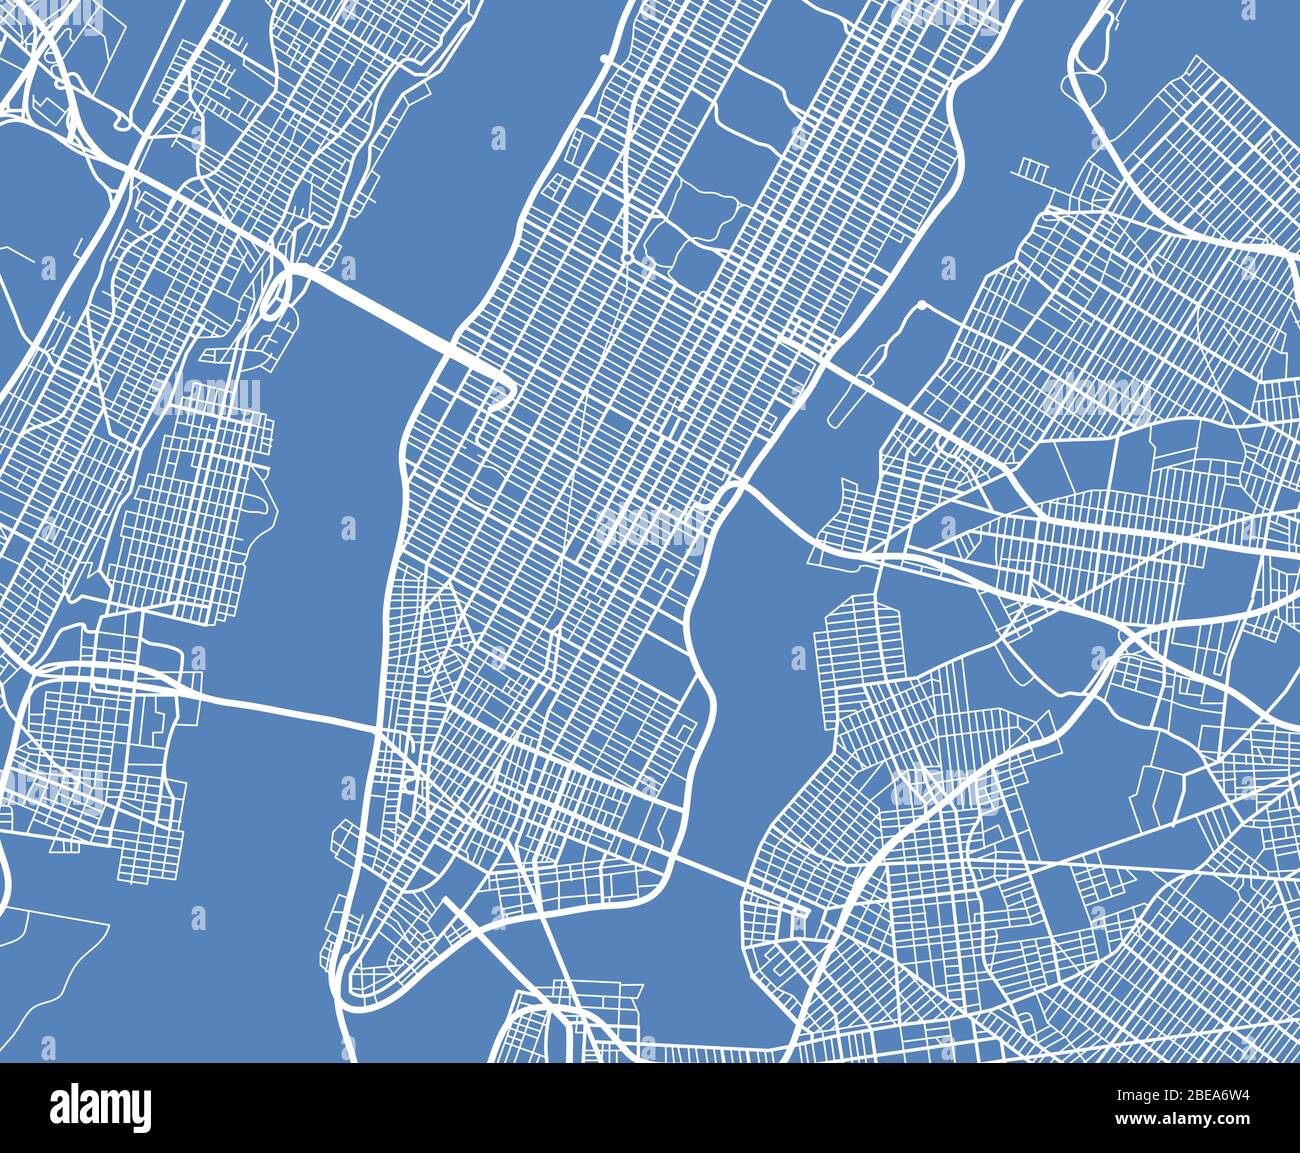 Luftaufnahme USA New York City Vektor Straßenkarte. City Street Aerial Map New york Illustration Stock Vektor